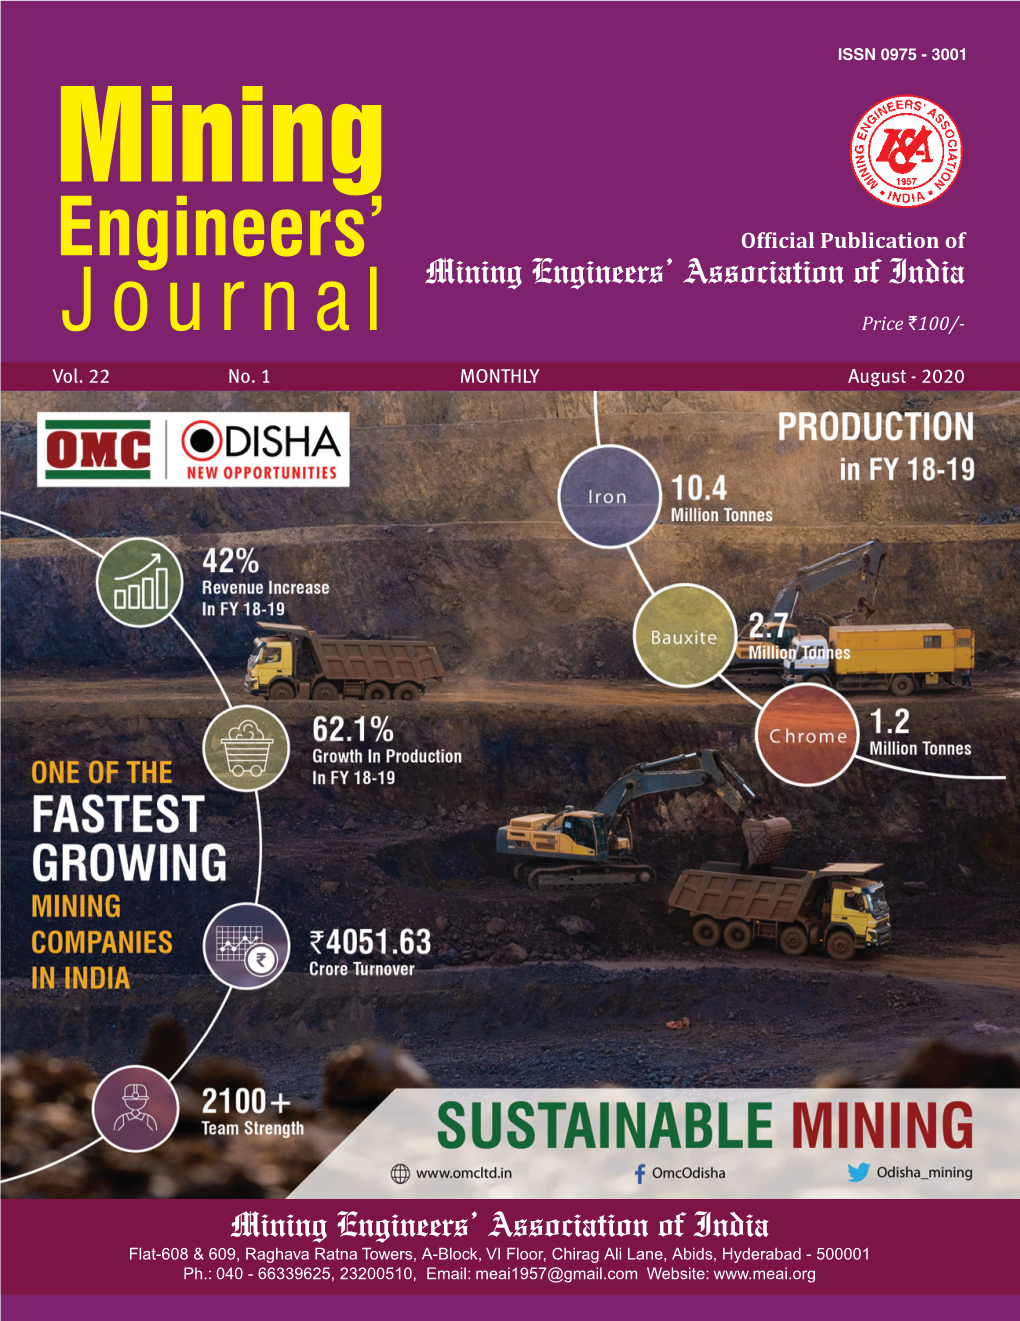 Mining Engineers' Association of India